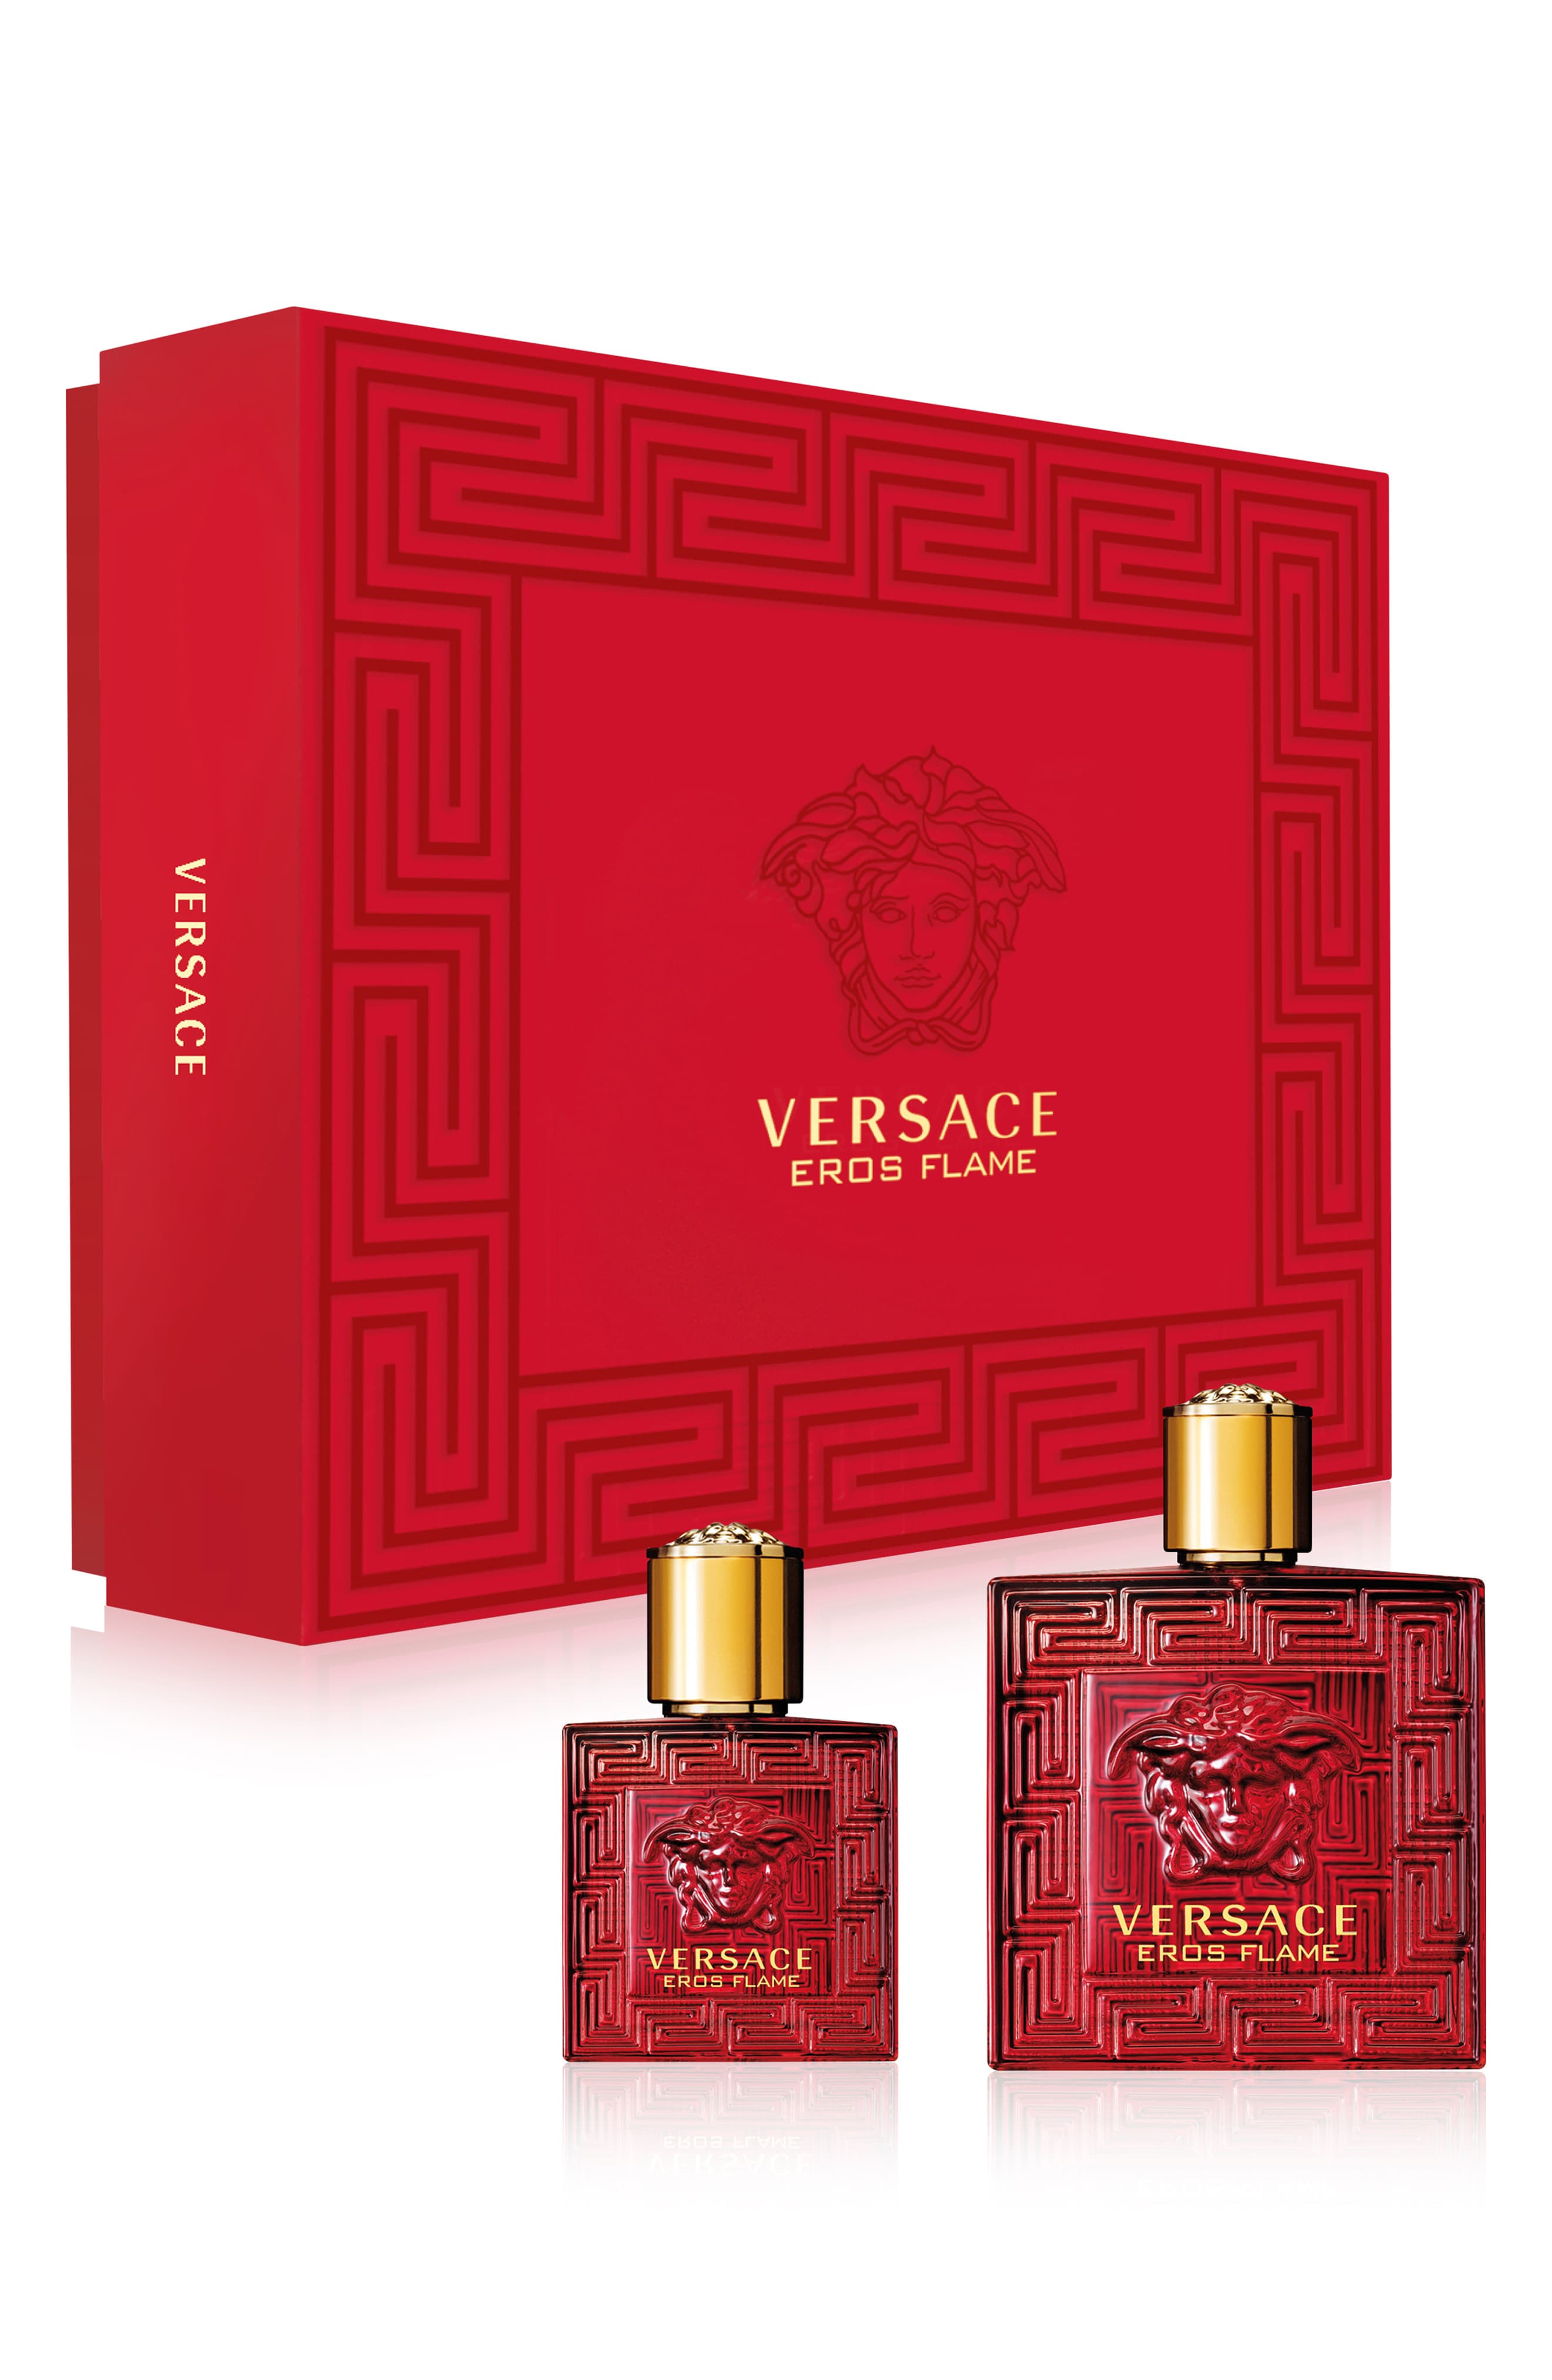 Версаче флейм. Versace Eros Flame. Versace Eros Flame Parfum. Versace Eros Travel Spray. Атомайзер Версаче.